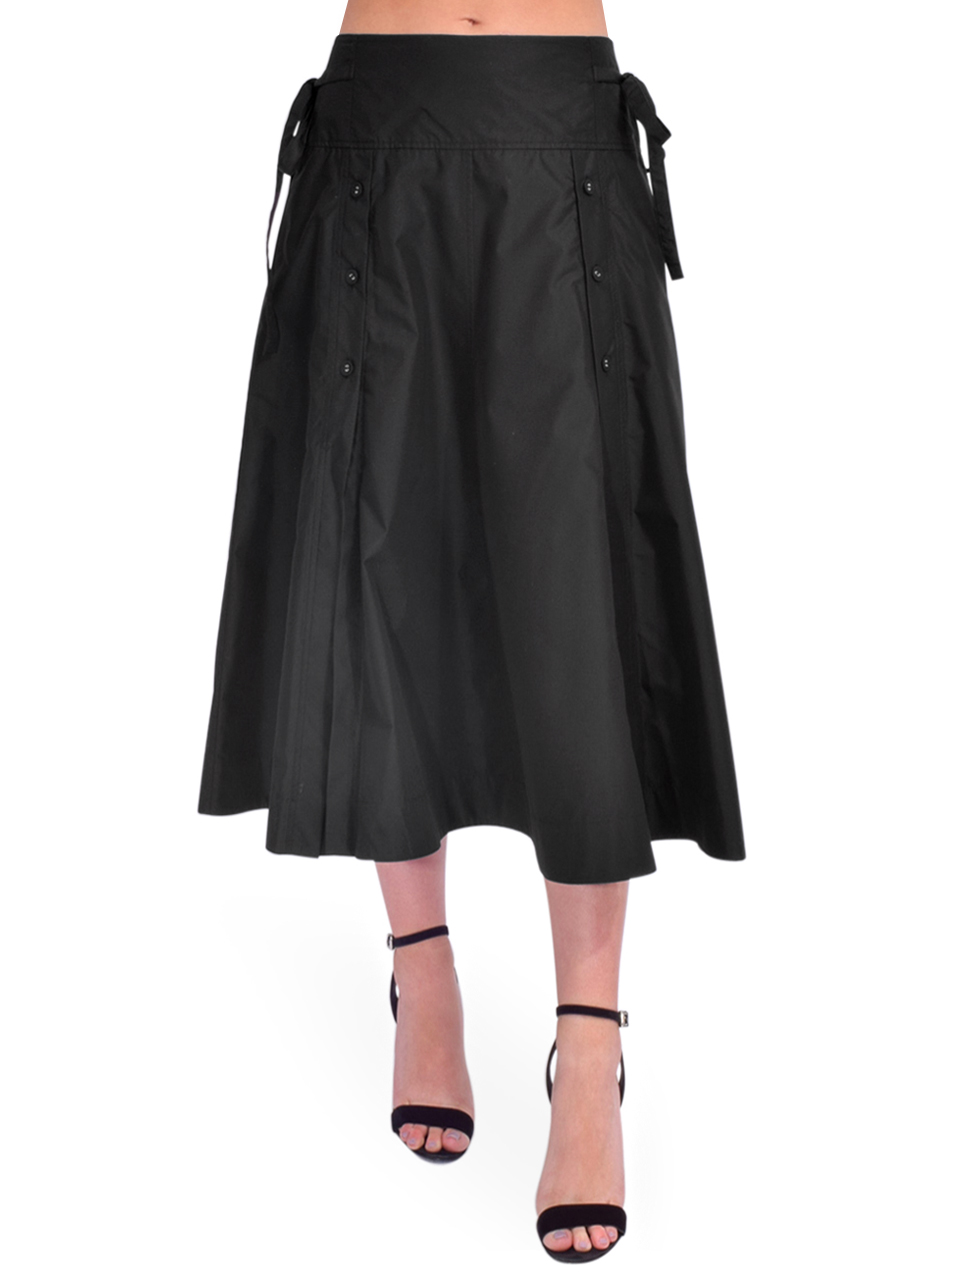 3.1 Phillip Lim Button Front Tie Waist Midi Skirt in Black Front View